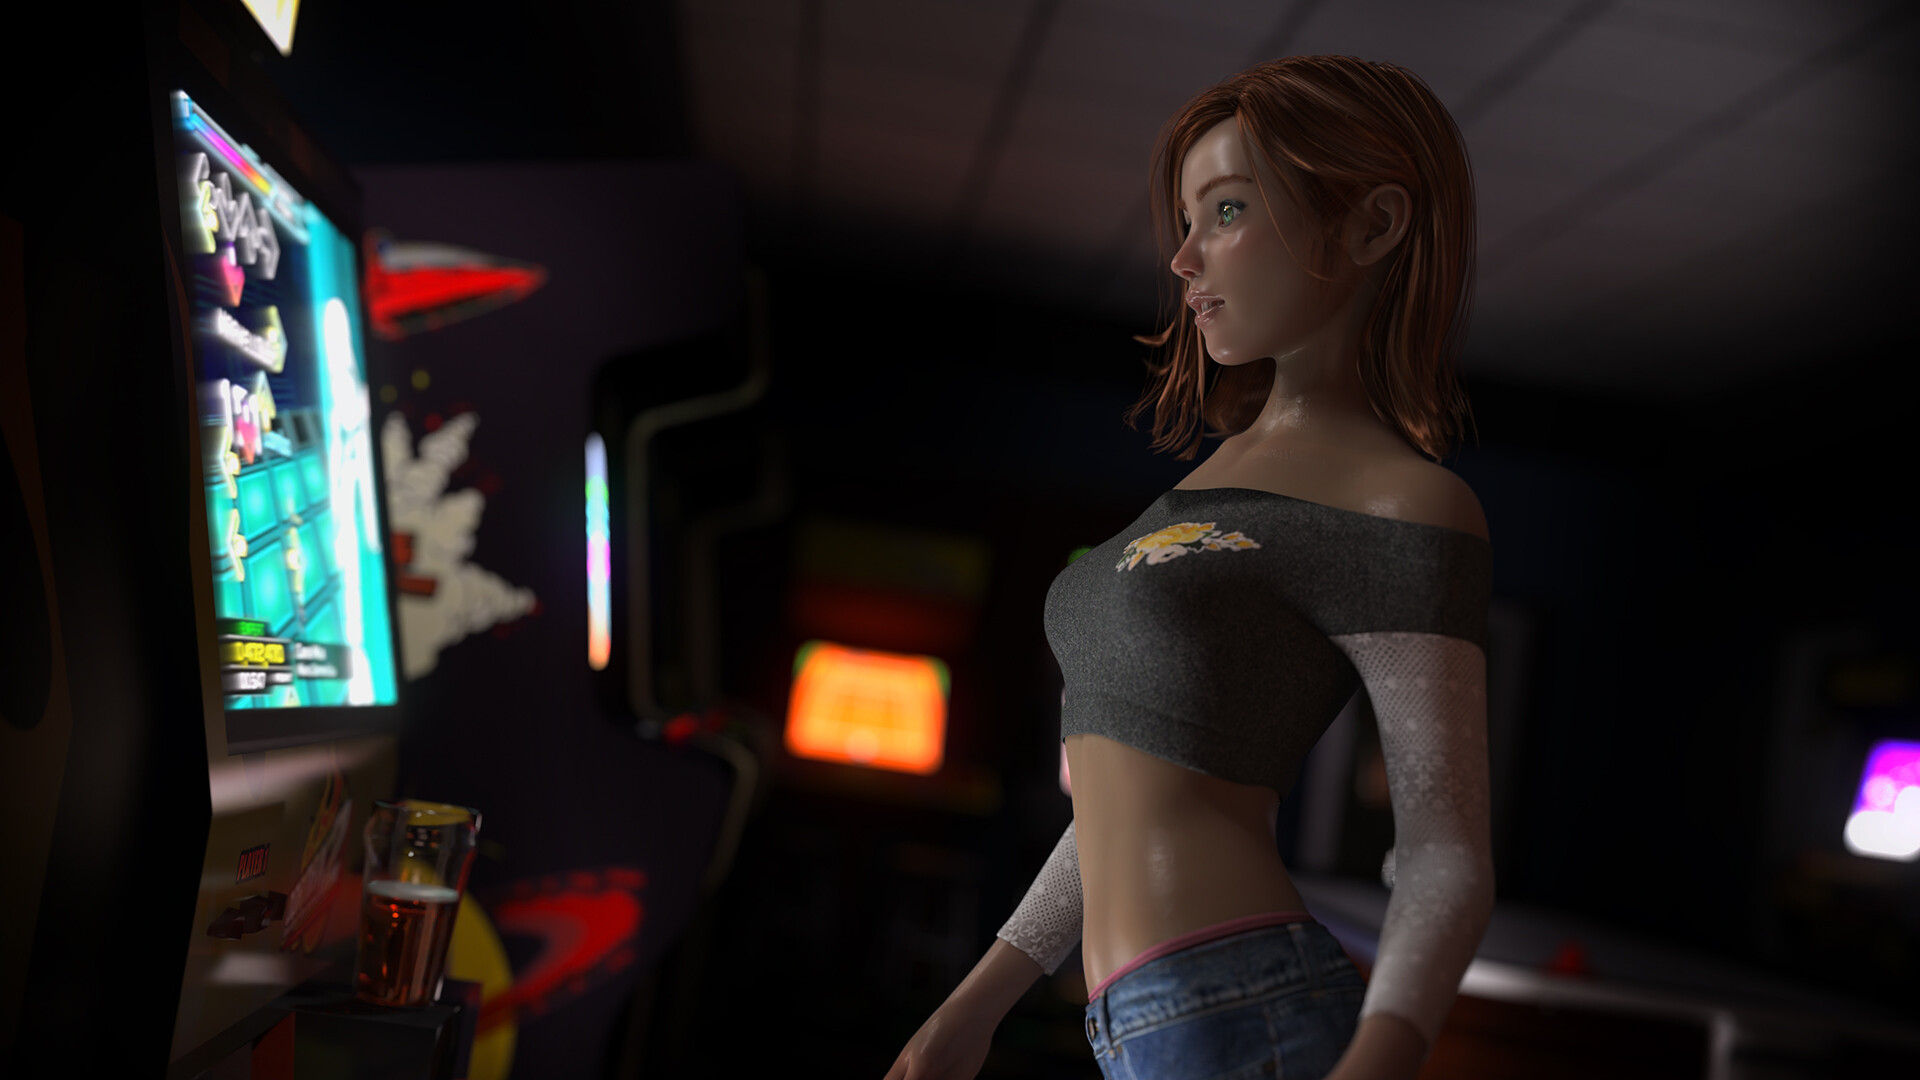 Ithius Eiros Women Redhead Digital Art 3D Dancer Jeans Short Tops Retro Games Video Games Green Eyes 1920x1080